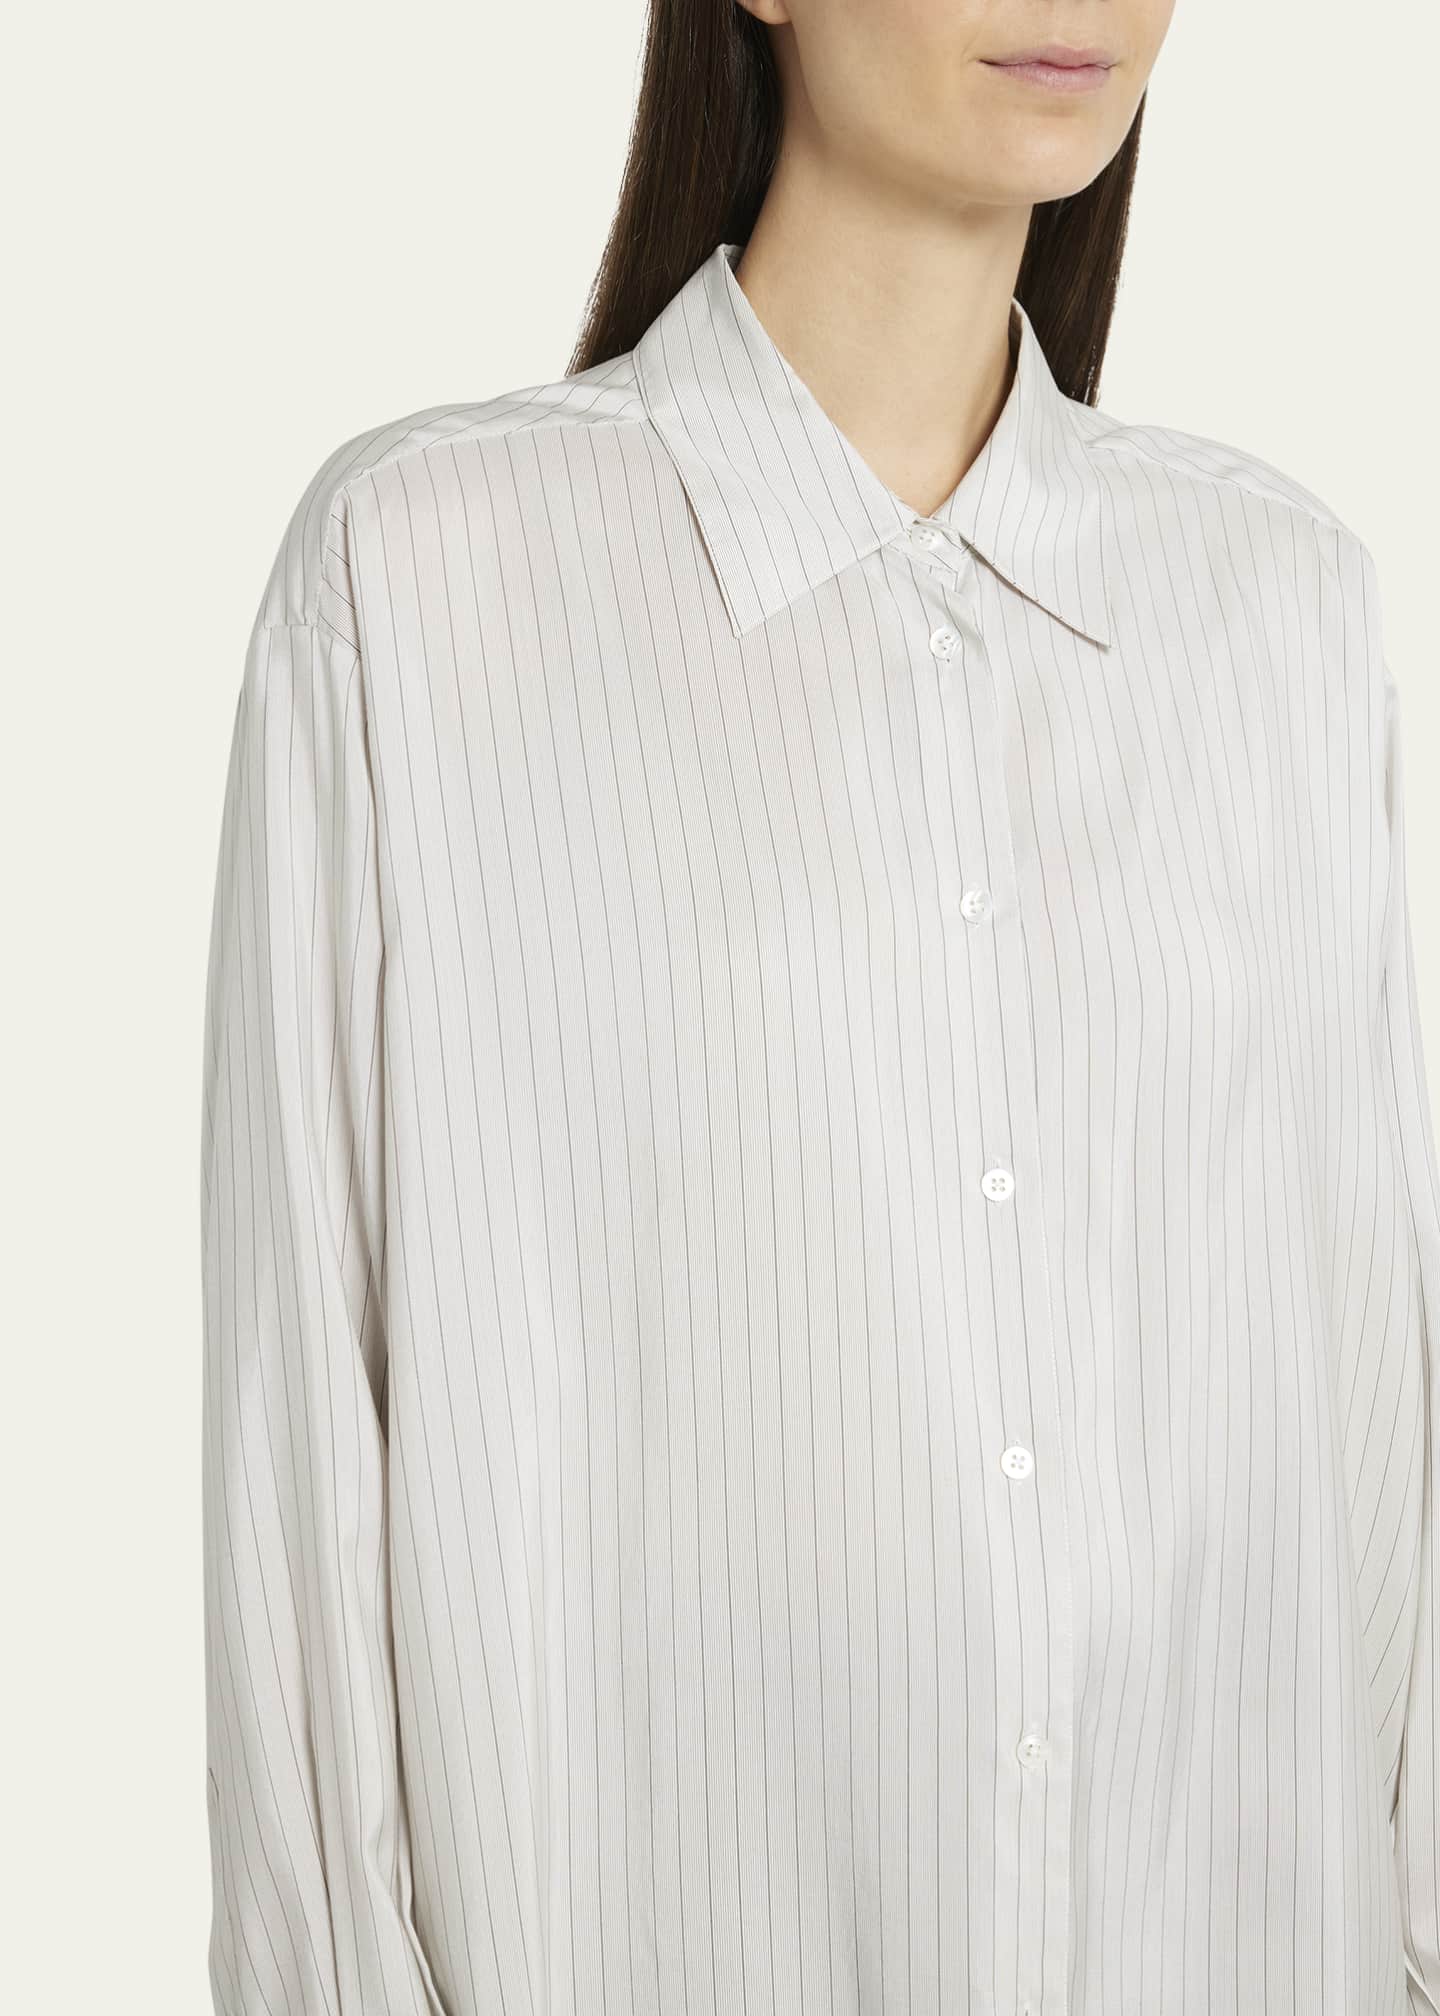 THE ROW Luka Stripe Oversized Button Down Shirt